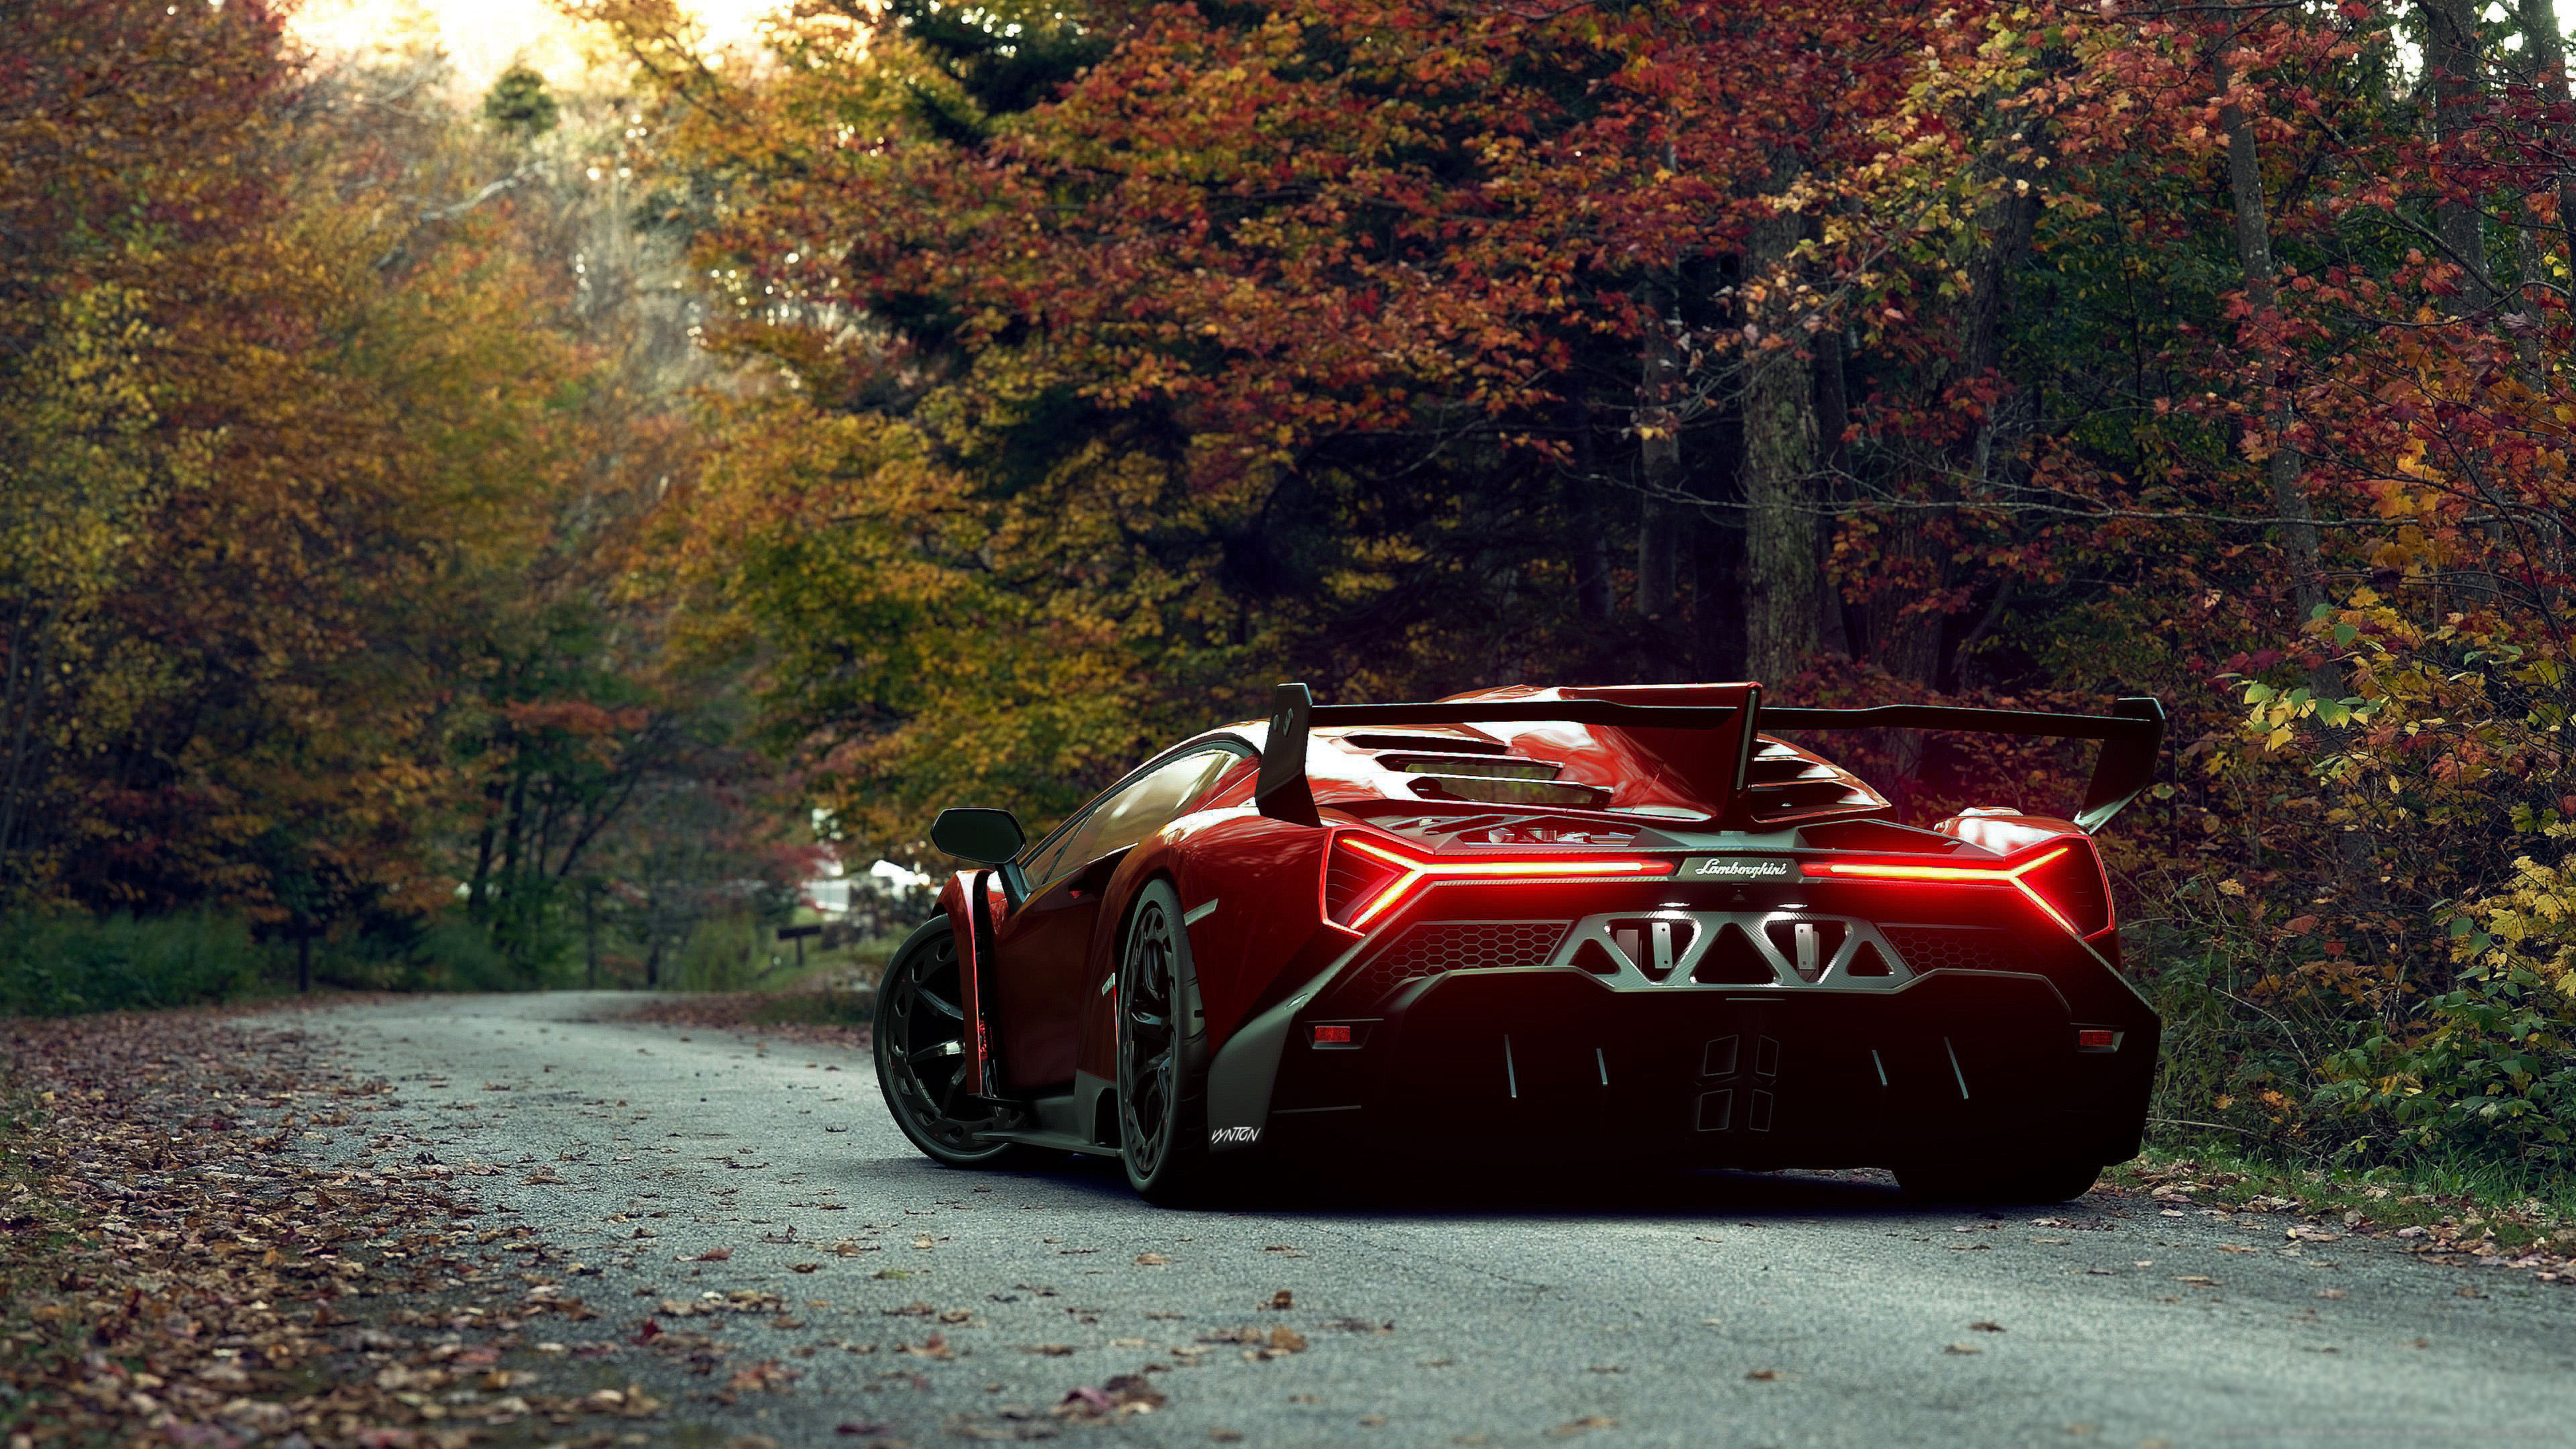 Lamborghini Veneno, Digital art, Autumn colors, Supercar wallpapers, 3840x2160 4K Desktop